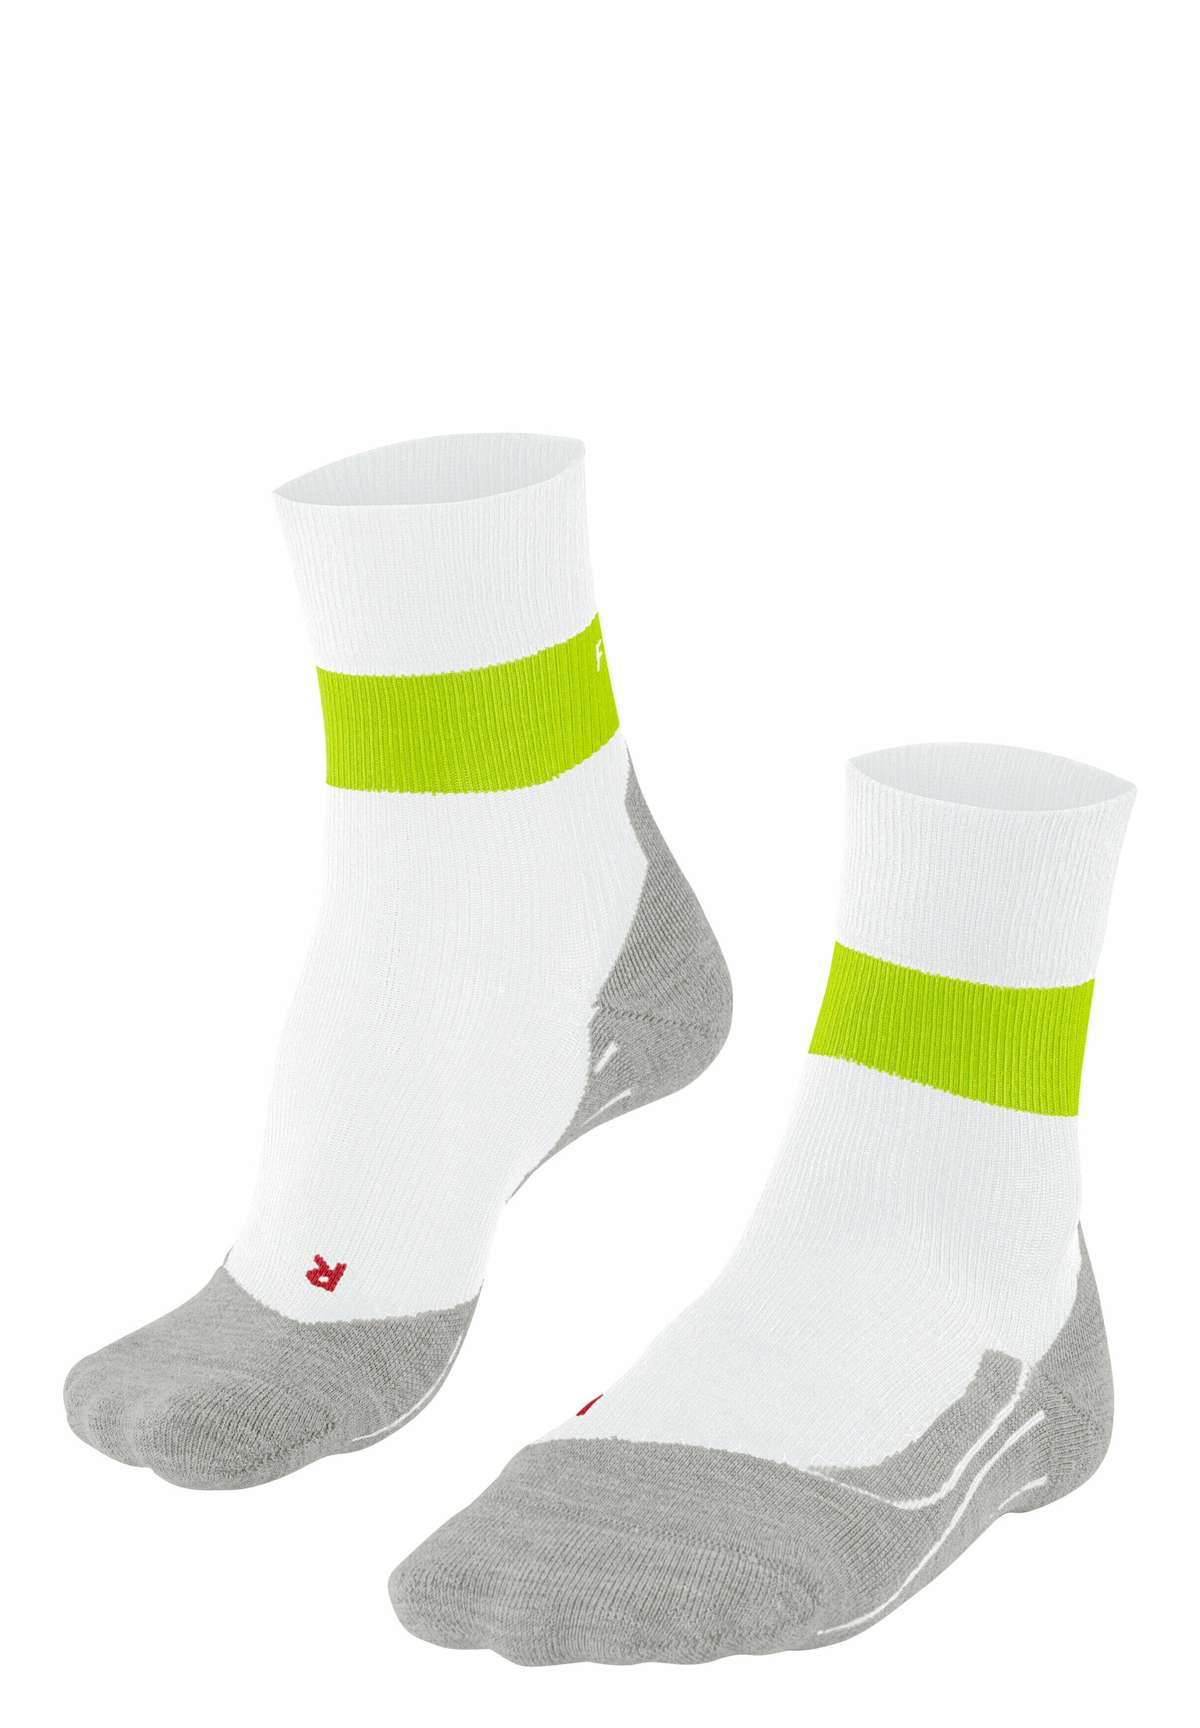 Спортивные носки RU Compression Stabilizing breathable quick-dry